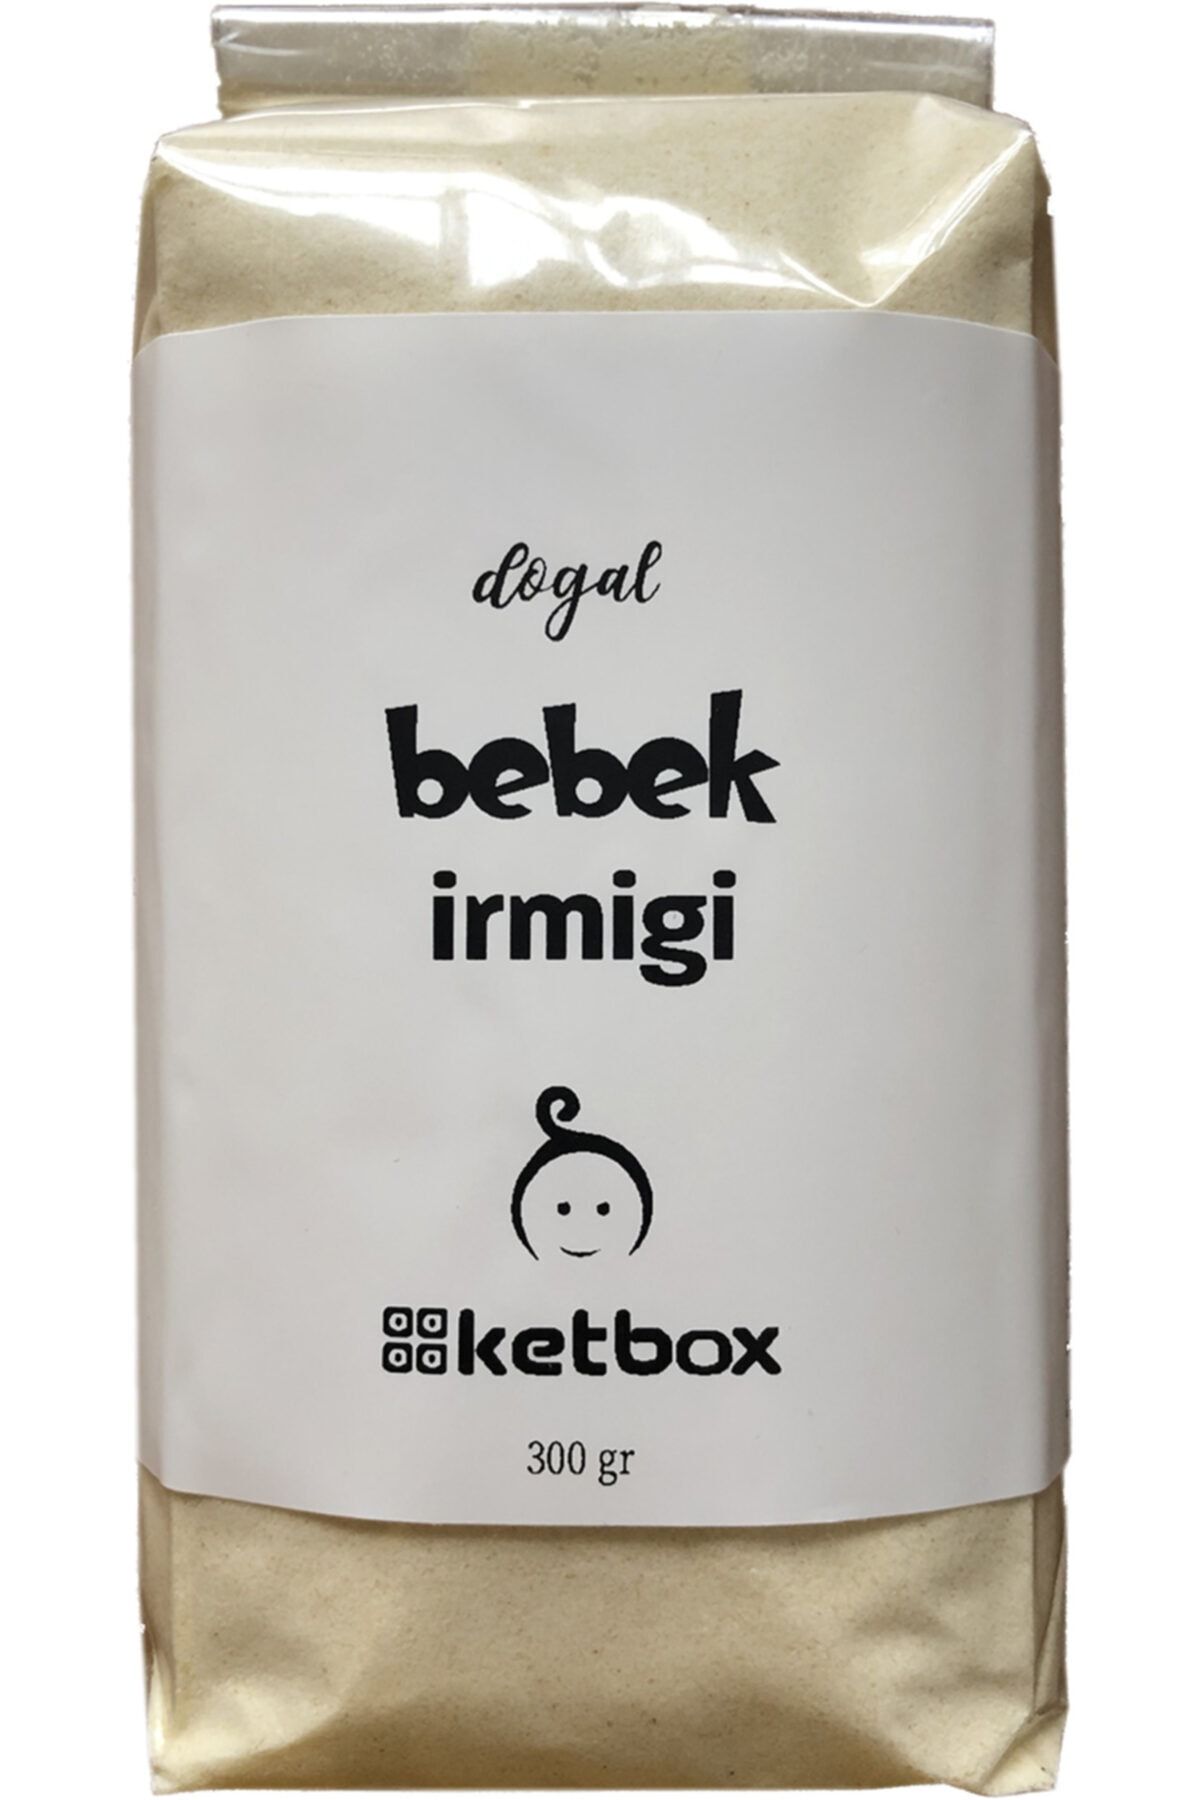 ketbox organik dogal bebek irmigi 600gr 300gr 2 paket fiyati yorumlari trendyol